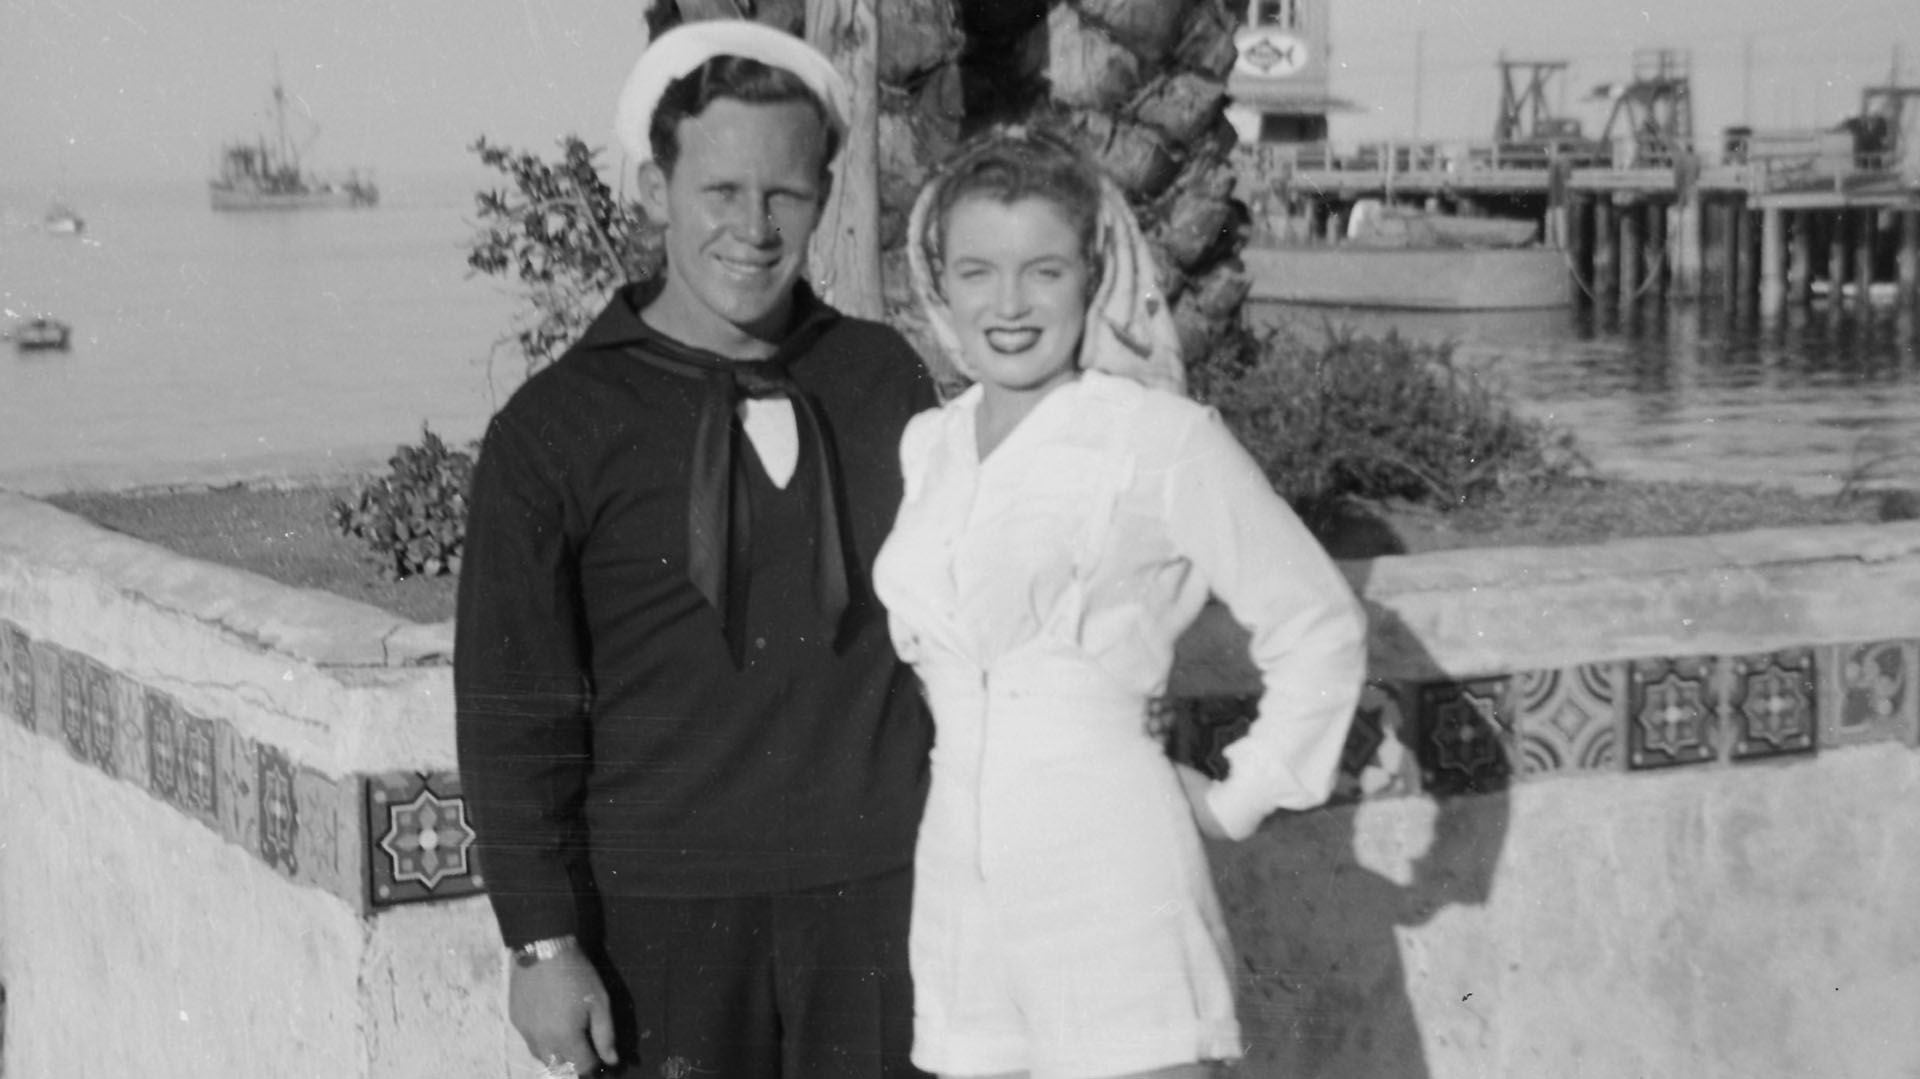 Norma Jeane Baker, en el futuro Marilyn Monroe, con su primer marido, el marino mercante James Dougherty en Avalon, Santa Catalina, alrededor de 1943 (Photo by Silver Screen Collection/Hulton Archive/Getty Images)